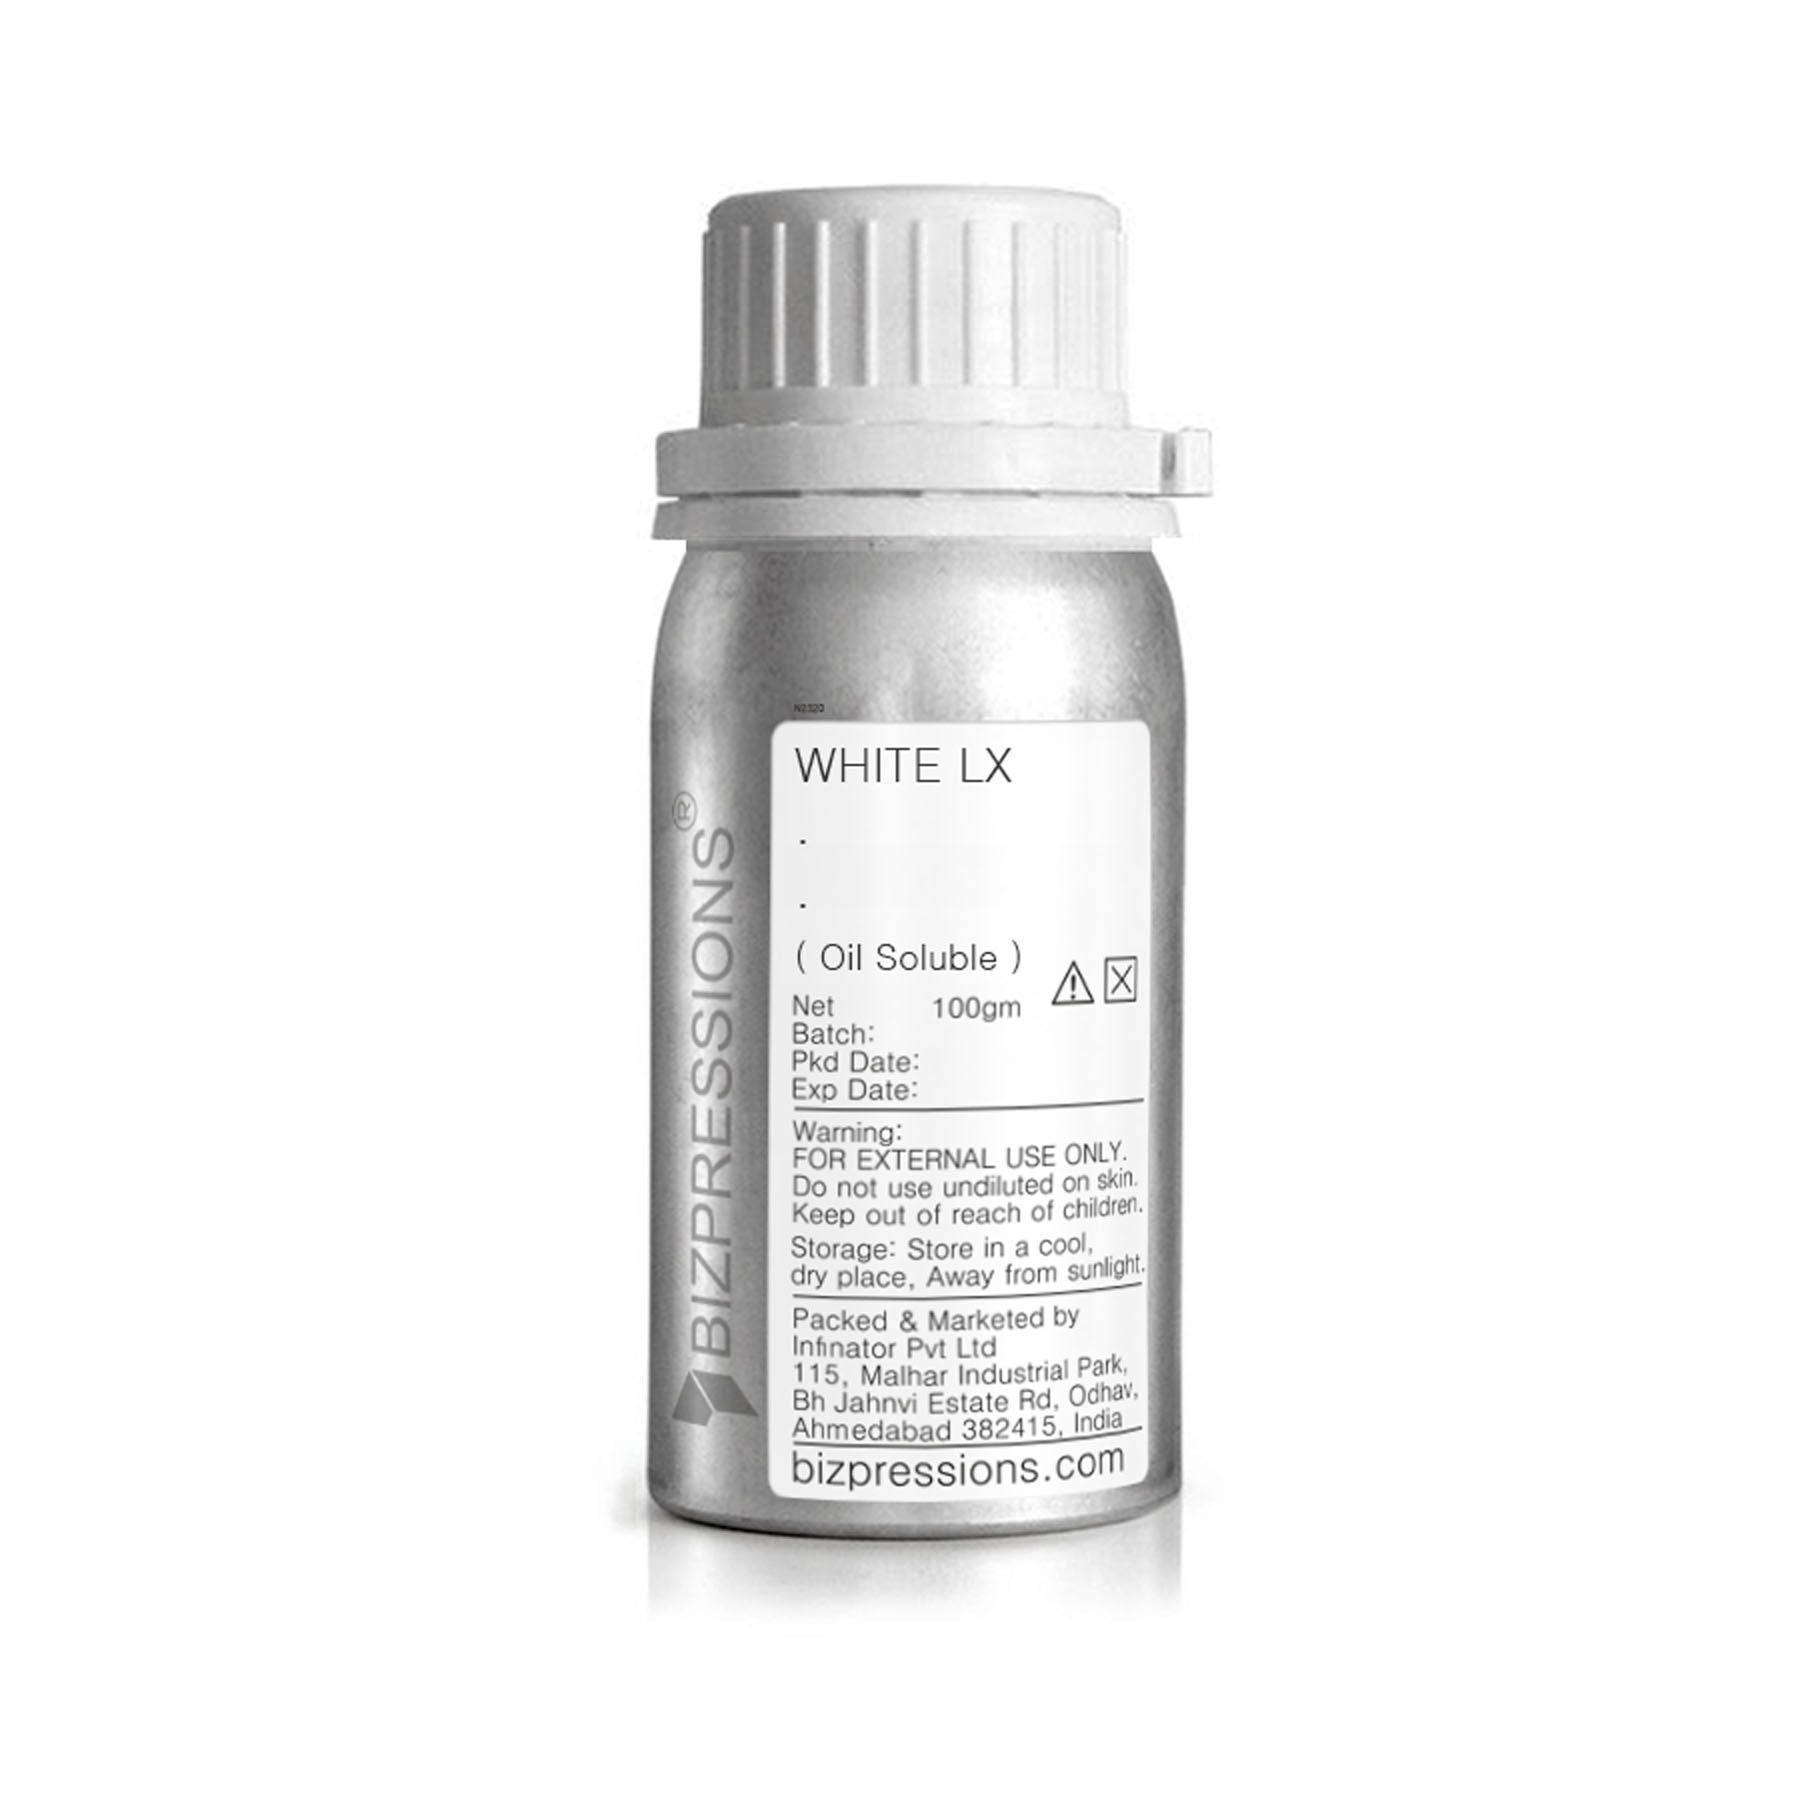 WHITE LX - Fragrance ( Oil Soluble ) - 100 gm